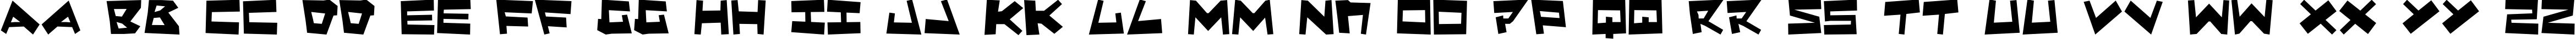 Пример написания английского алфавита шрифтом Quake & Shake